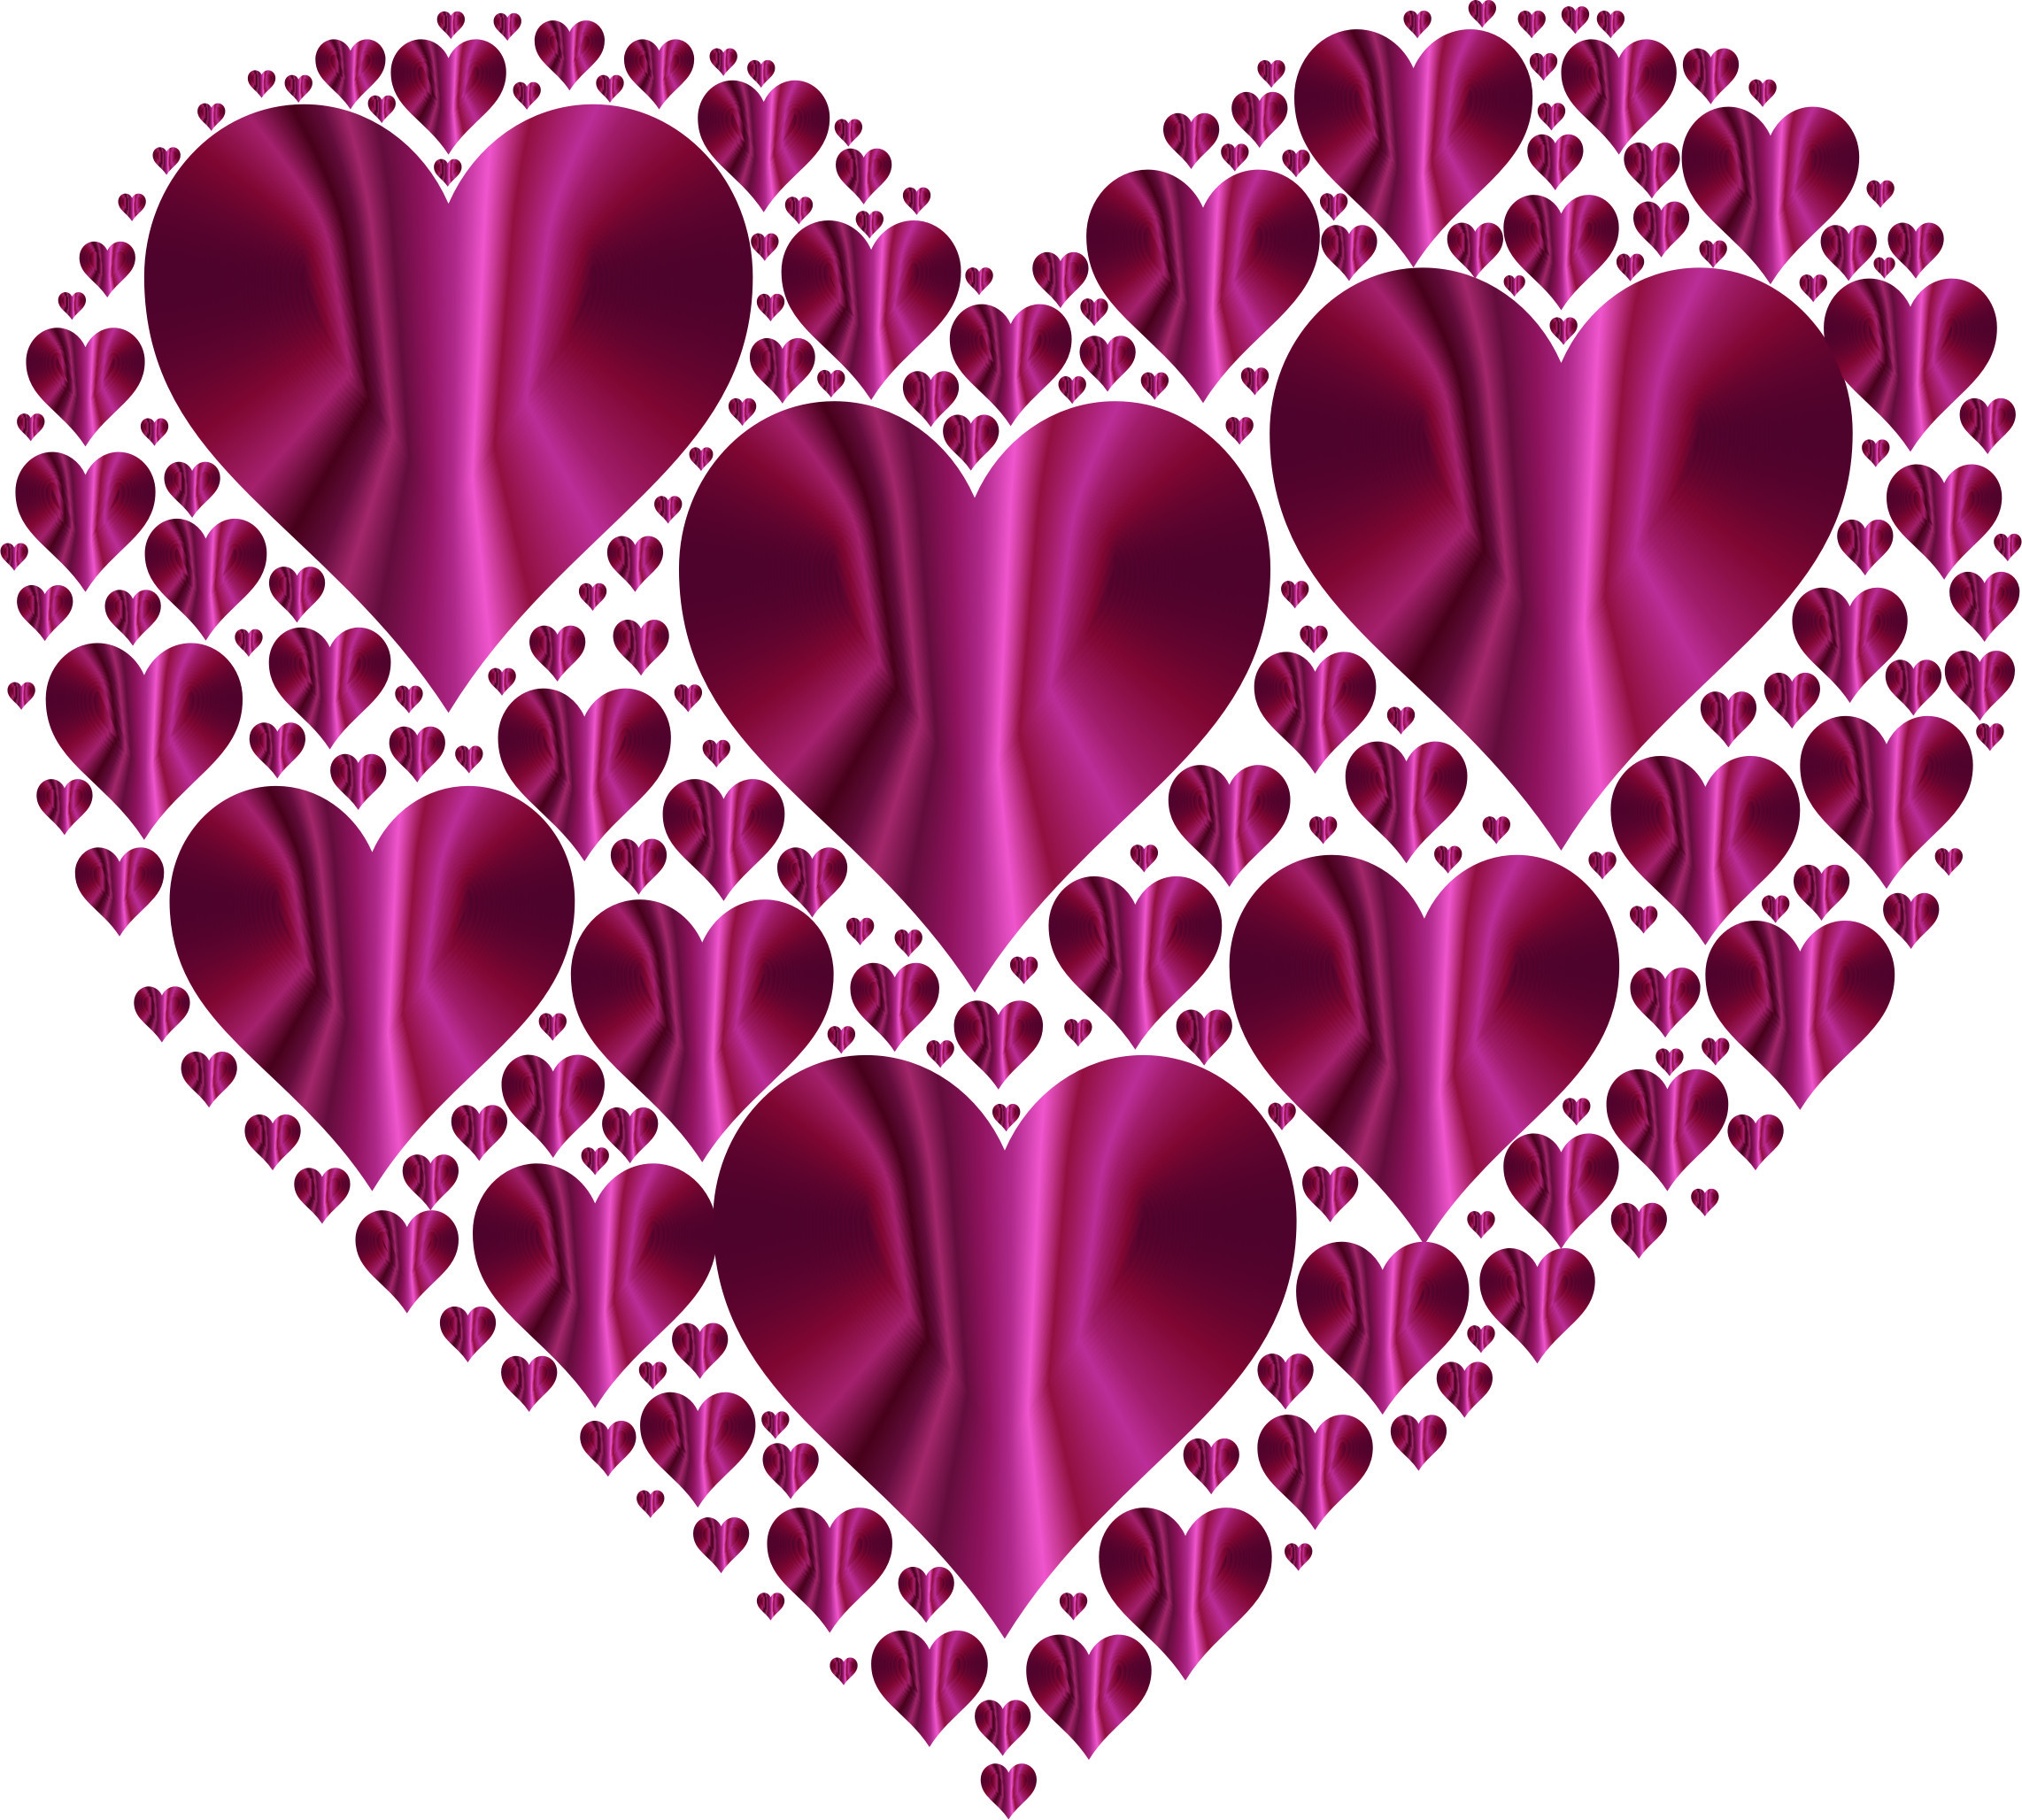 2284x2056 1920x1200 Image - Red purple heart Wallpaper dhtt.jpg | DJL's OCs Wiki .